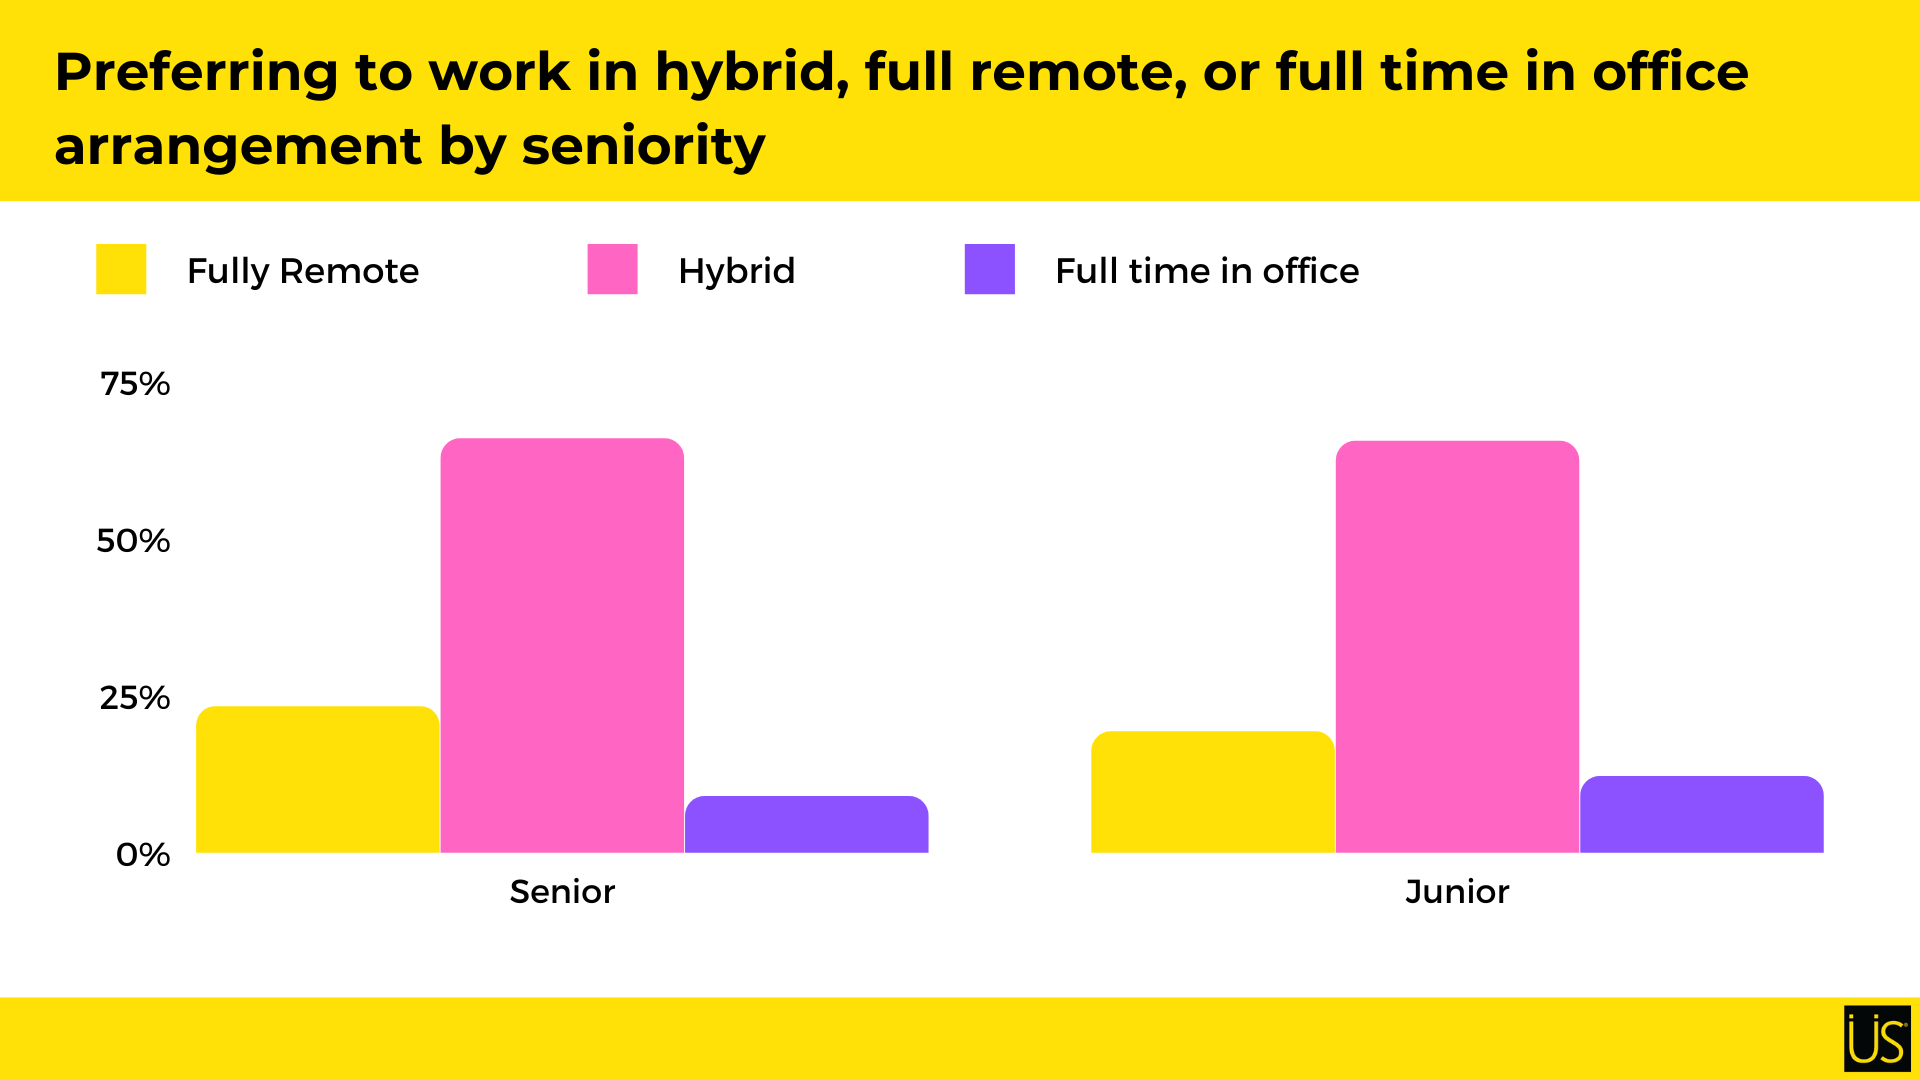 Work arrangement preference based on seniority